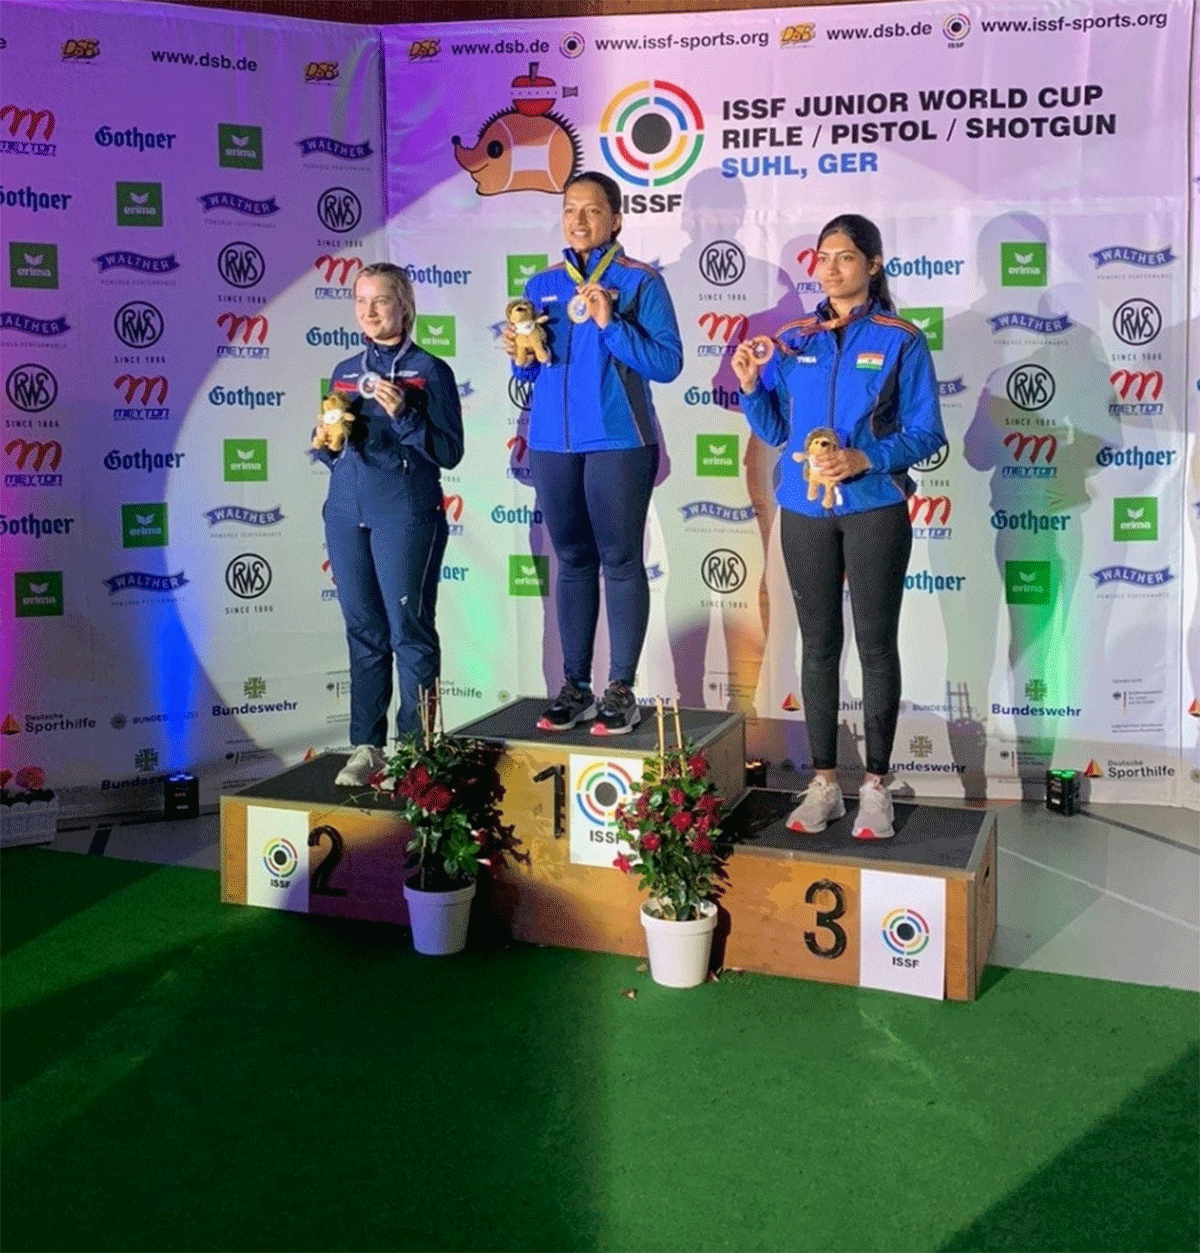 Sift Kaur Samra won the Women's 50M Rifle 3 Positions (3P) gold on Sunday evening.